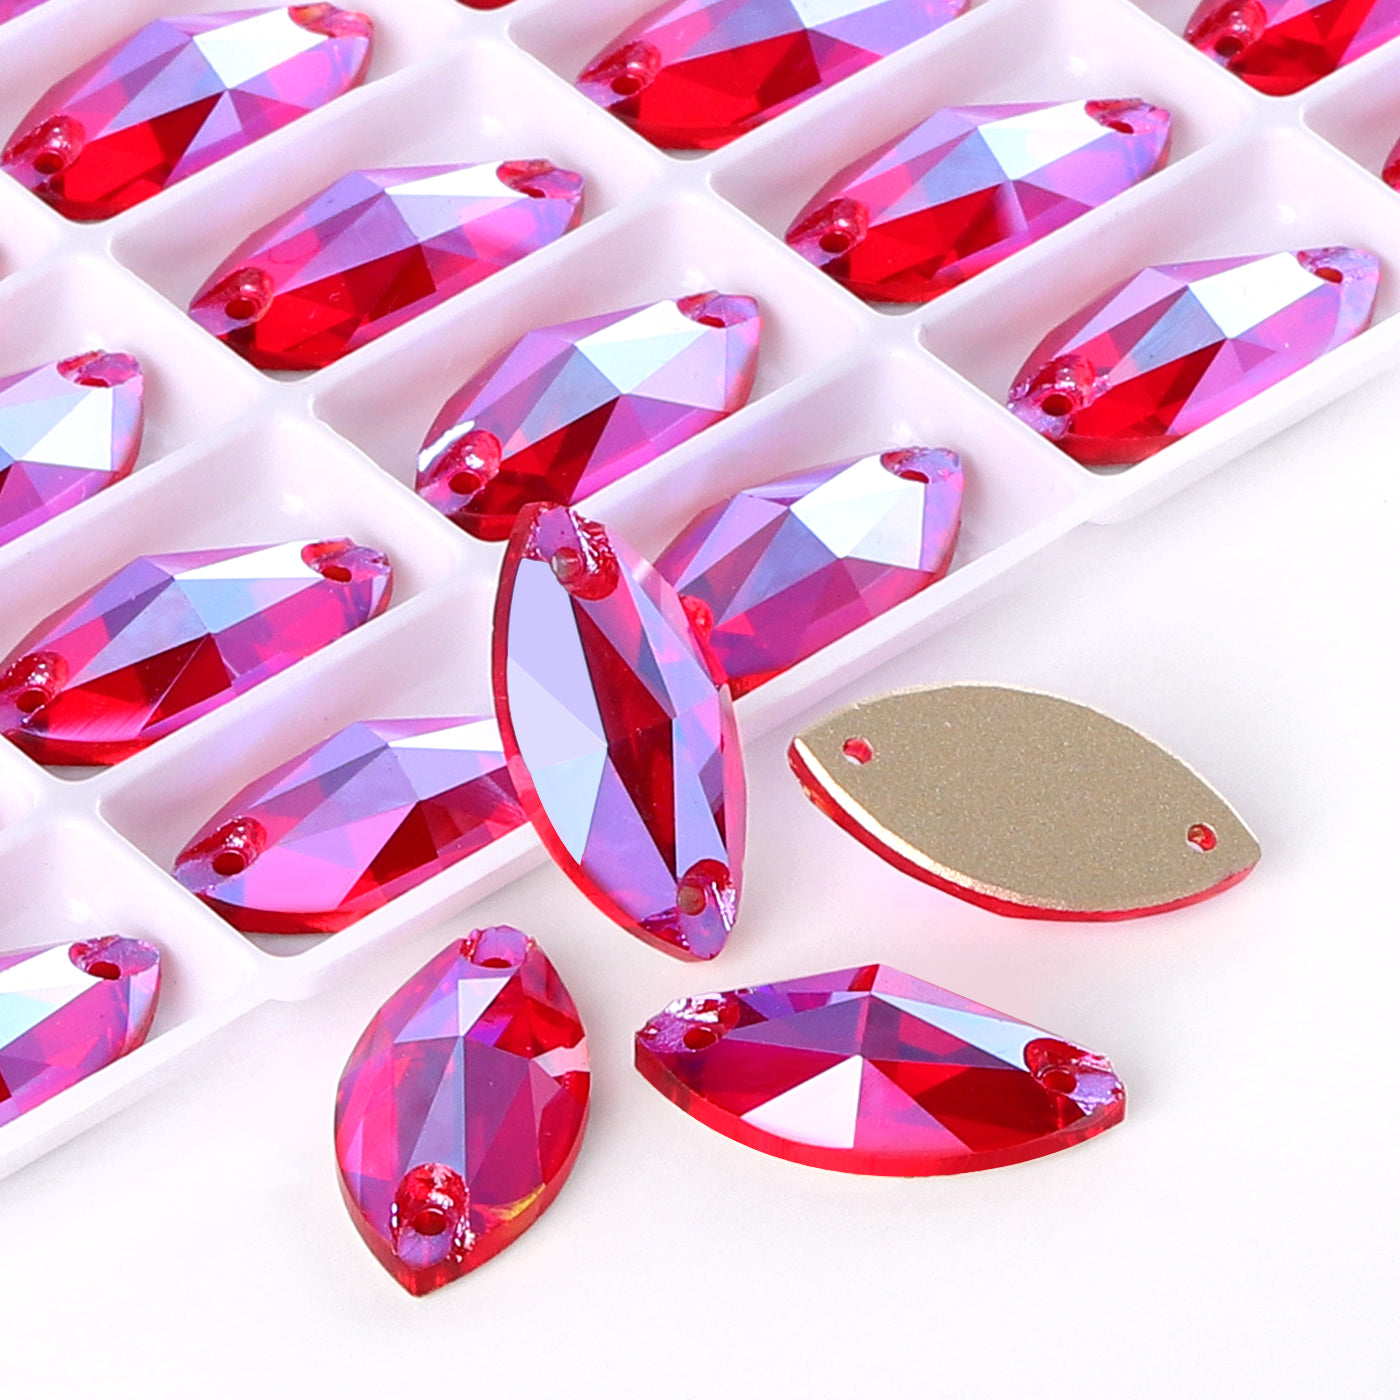 Light Siam Shimmer Navette Shape High Quality Glass Sew-on Rhinestones